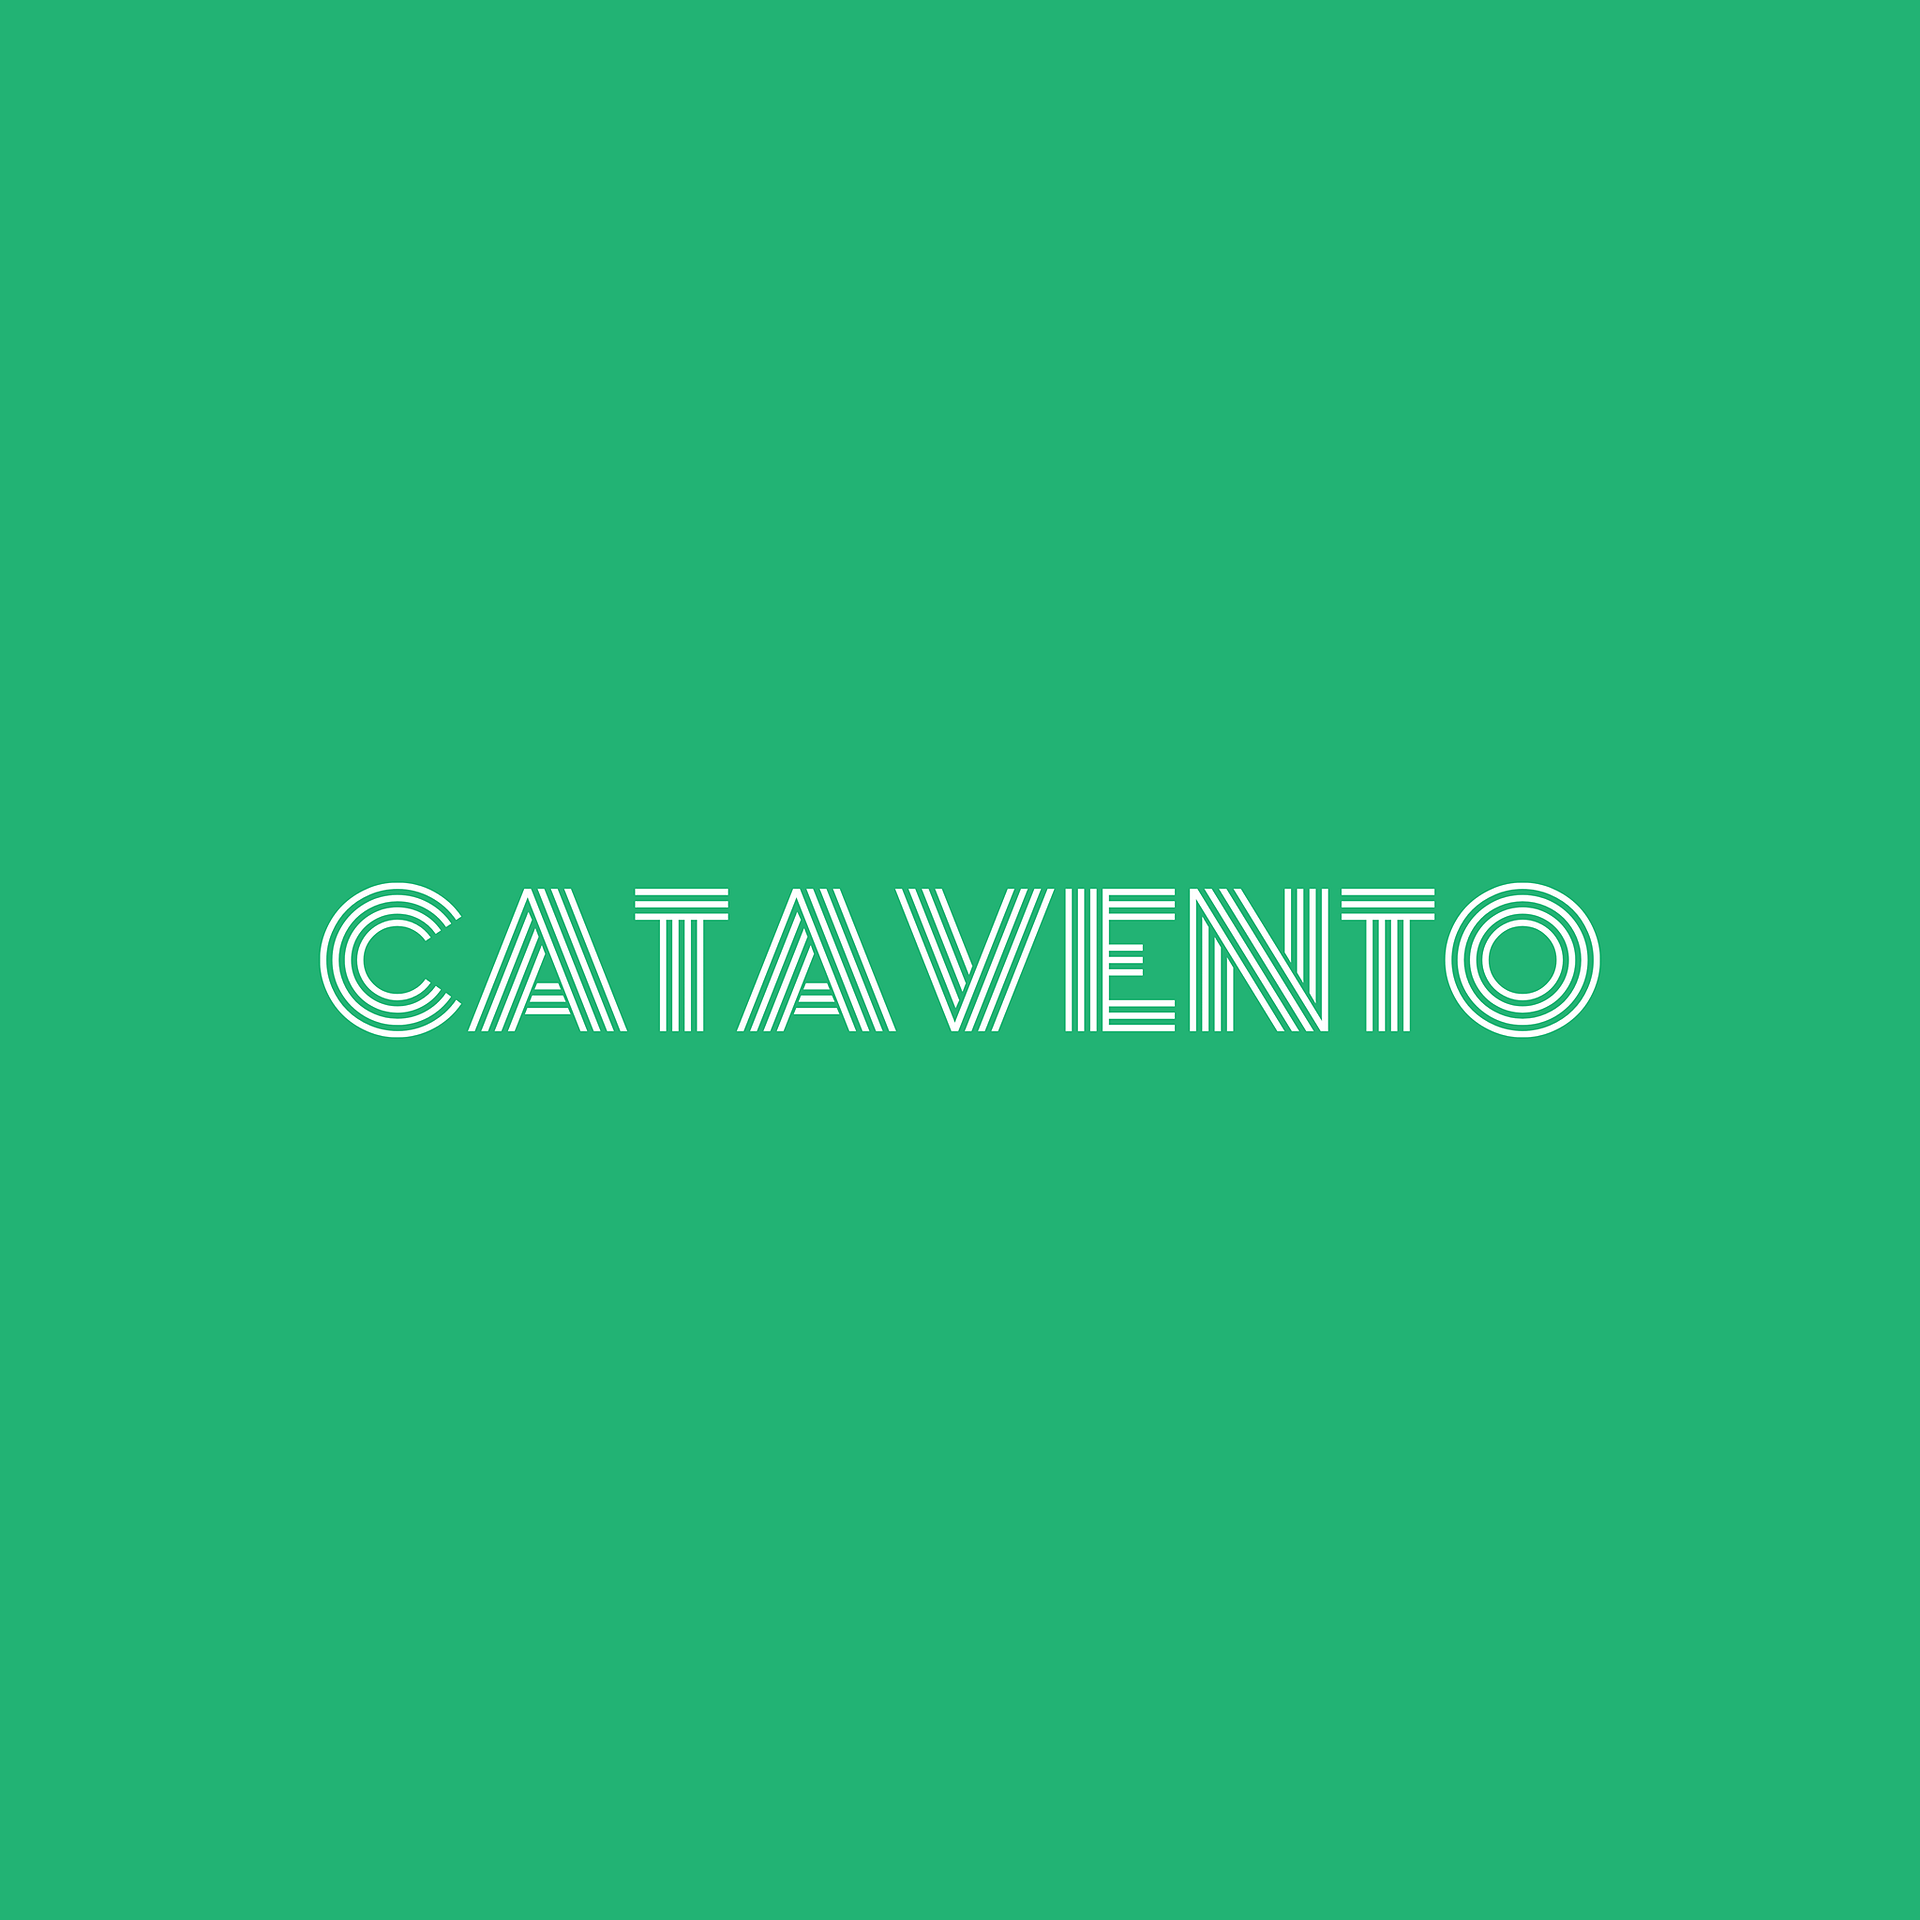 Catavento Books